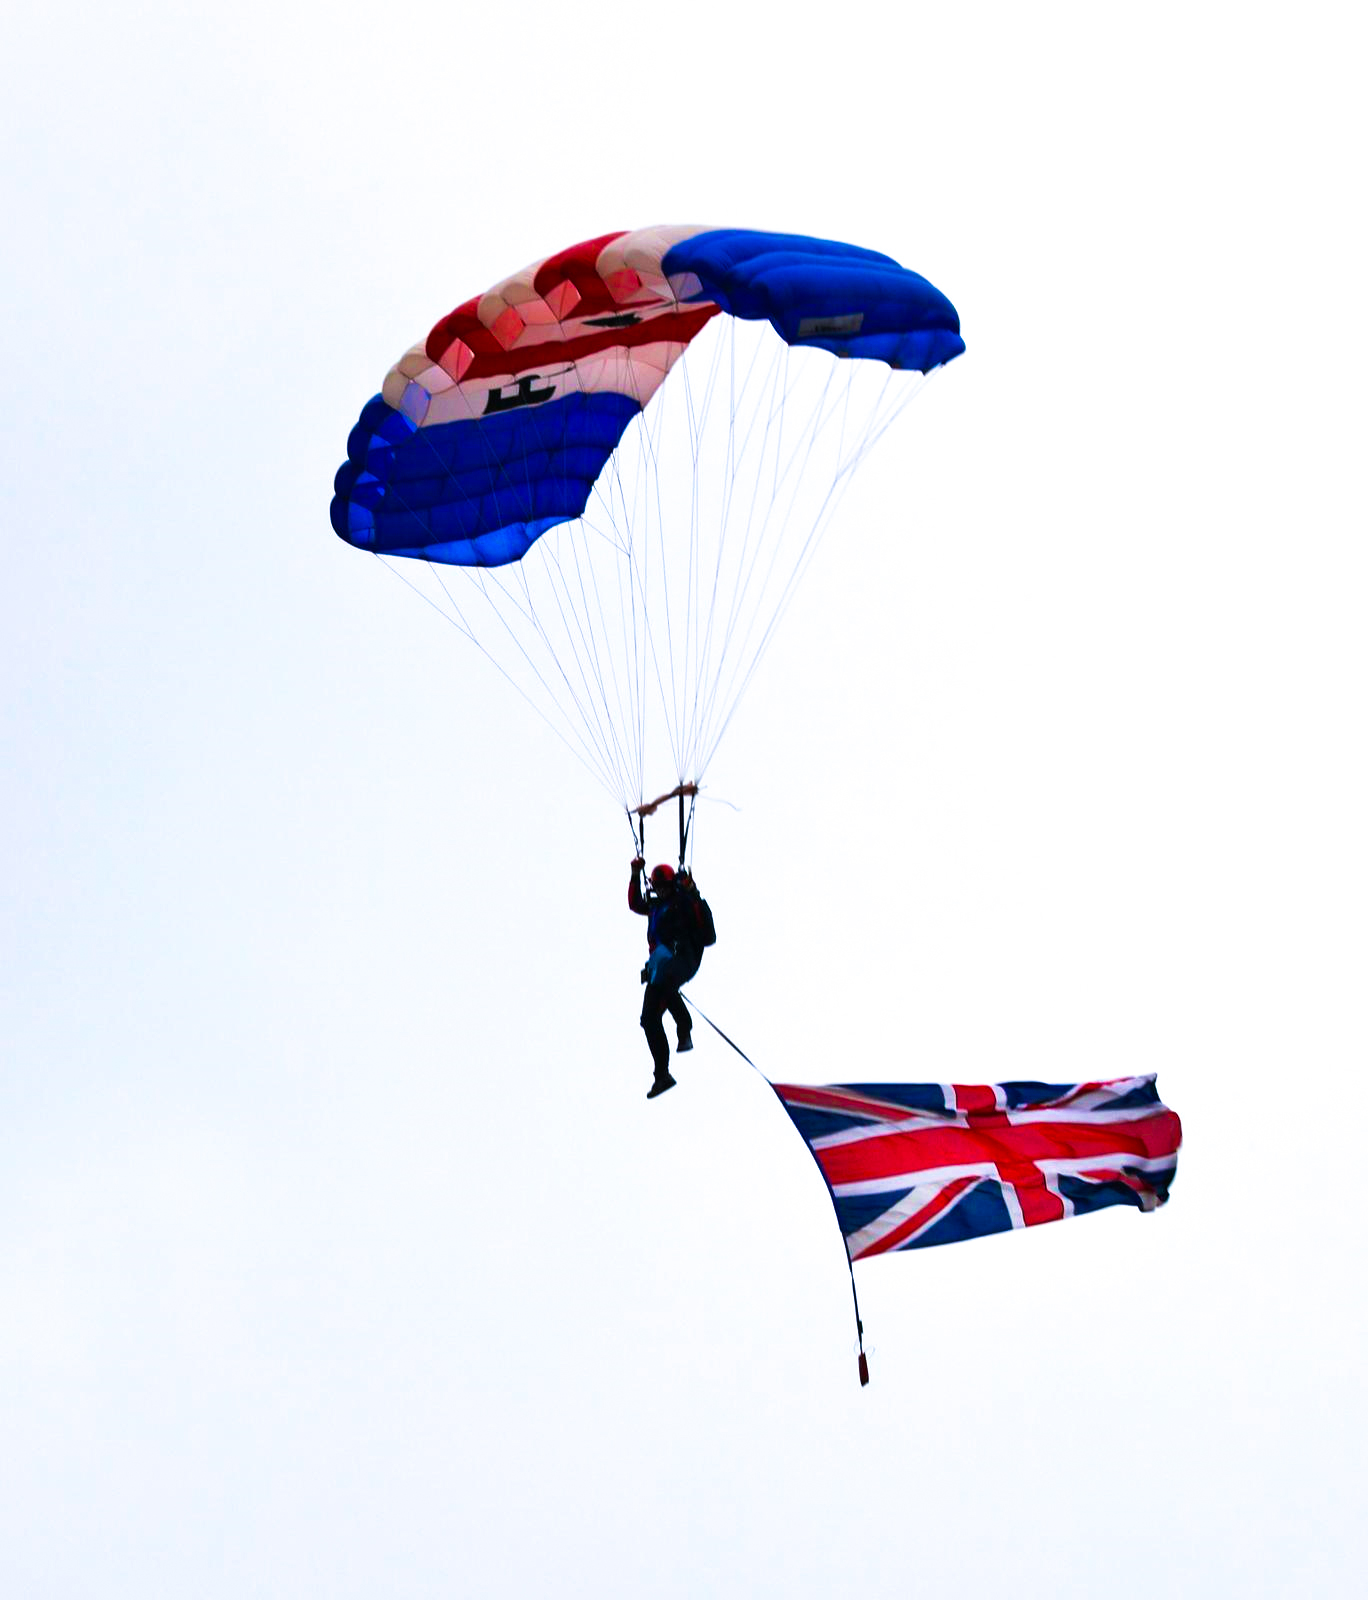 RAF Falcons Parachute Display Team kickstart their season at the Peterborough Truckfest